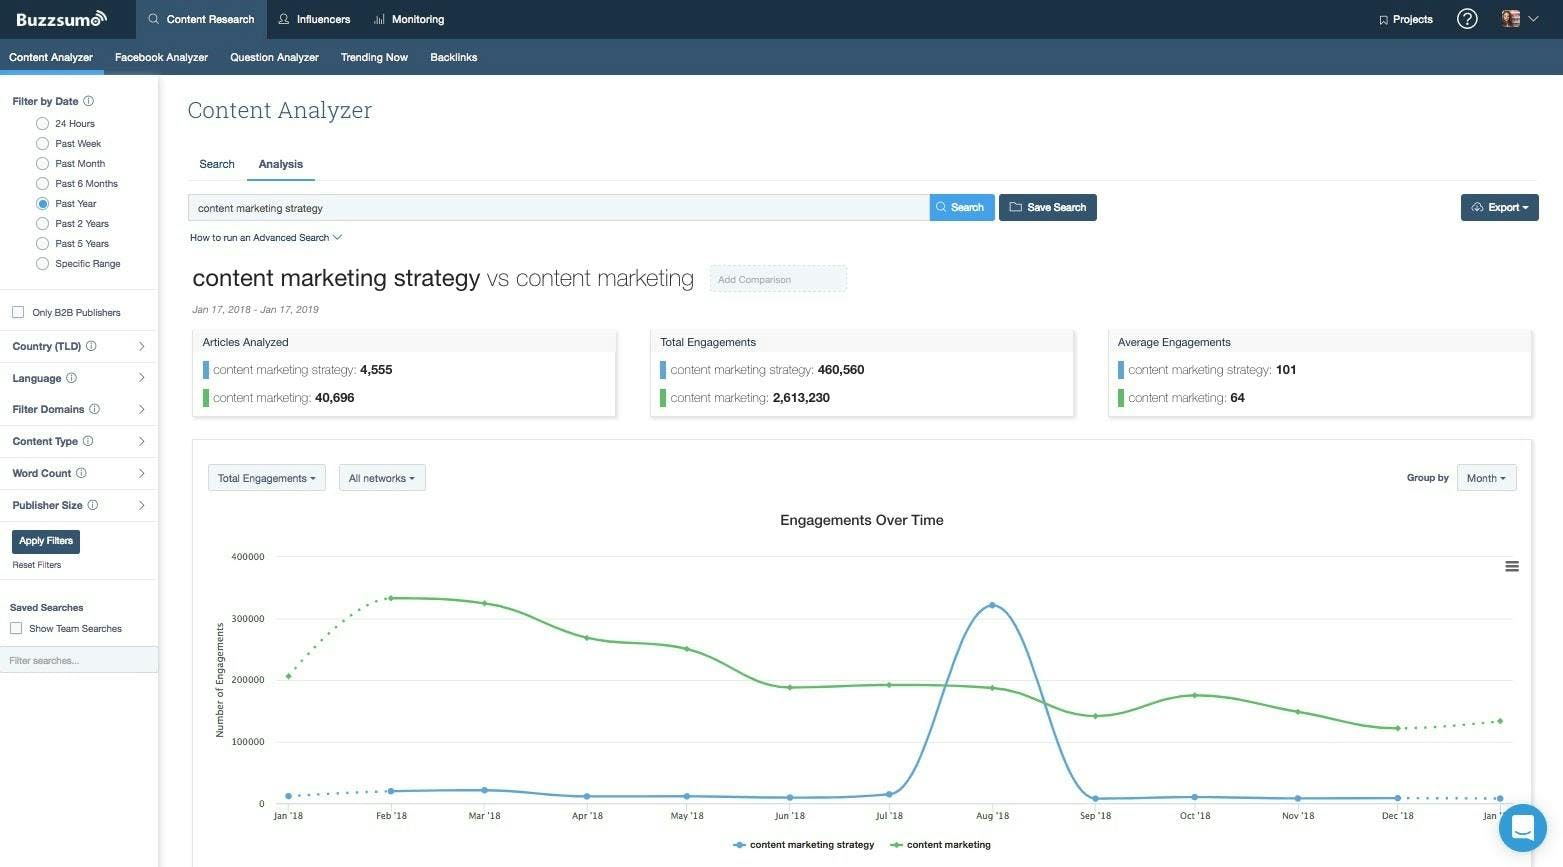 screenshot of buzzsumo analytics for social media monitoring tool